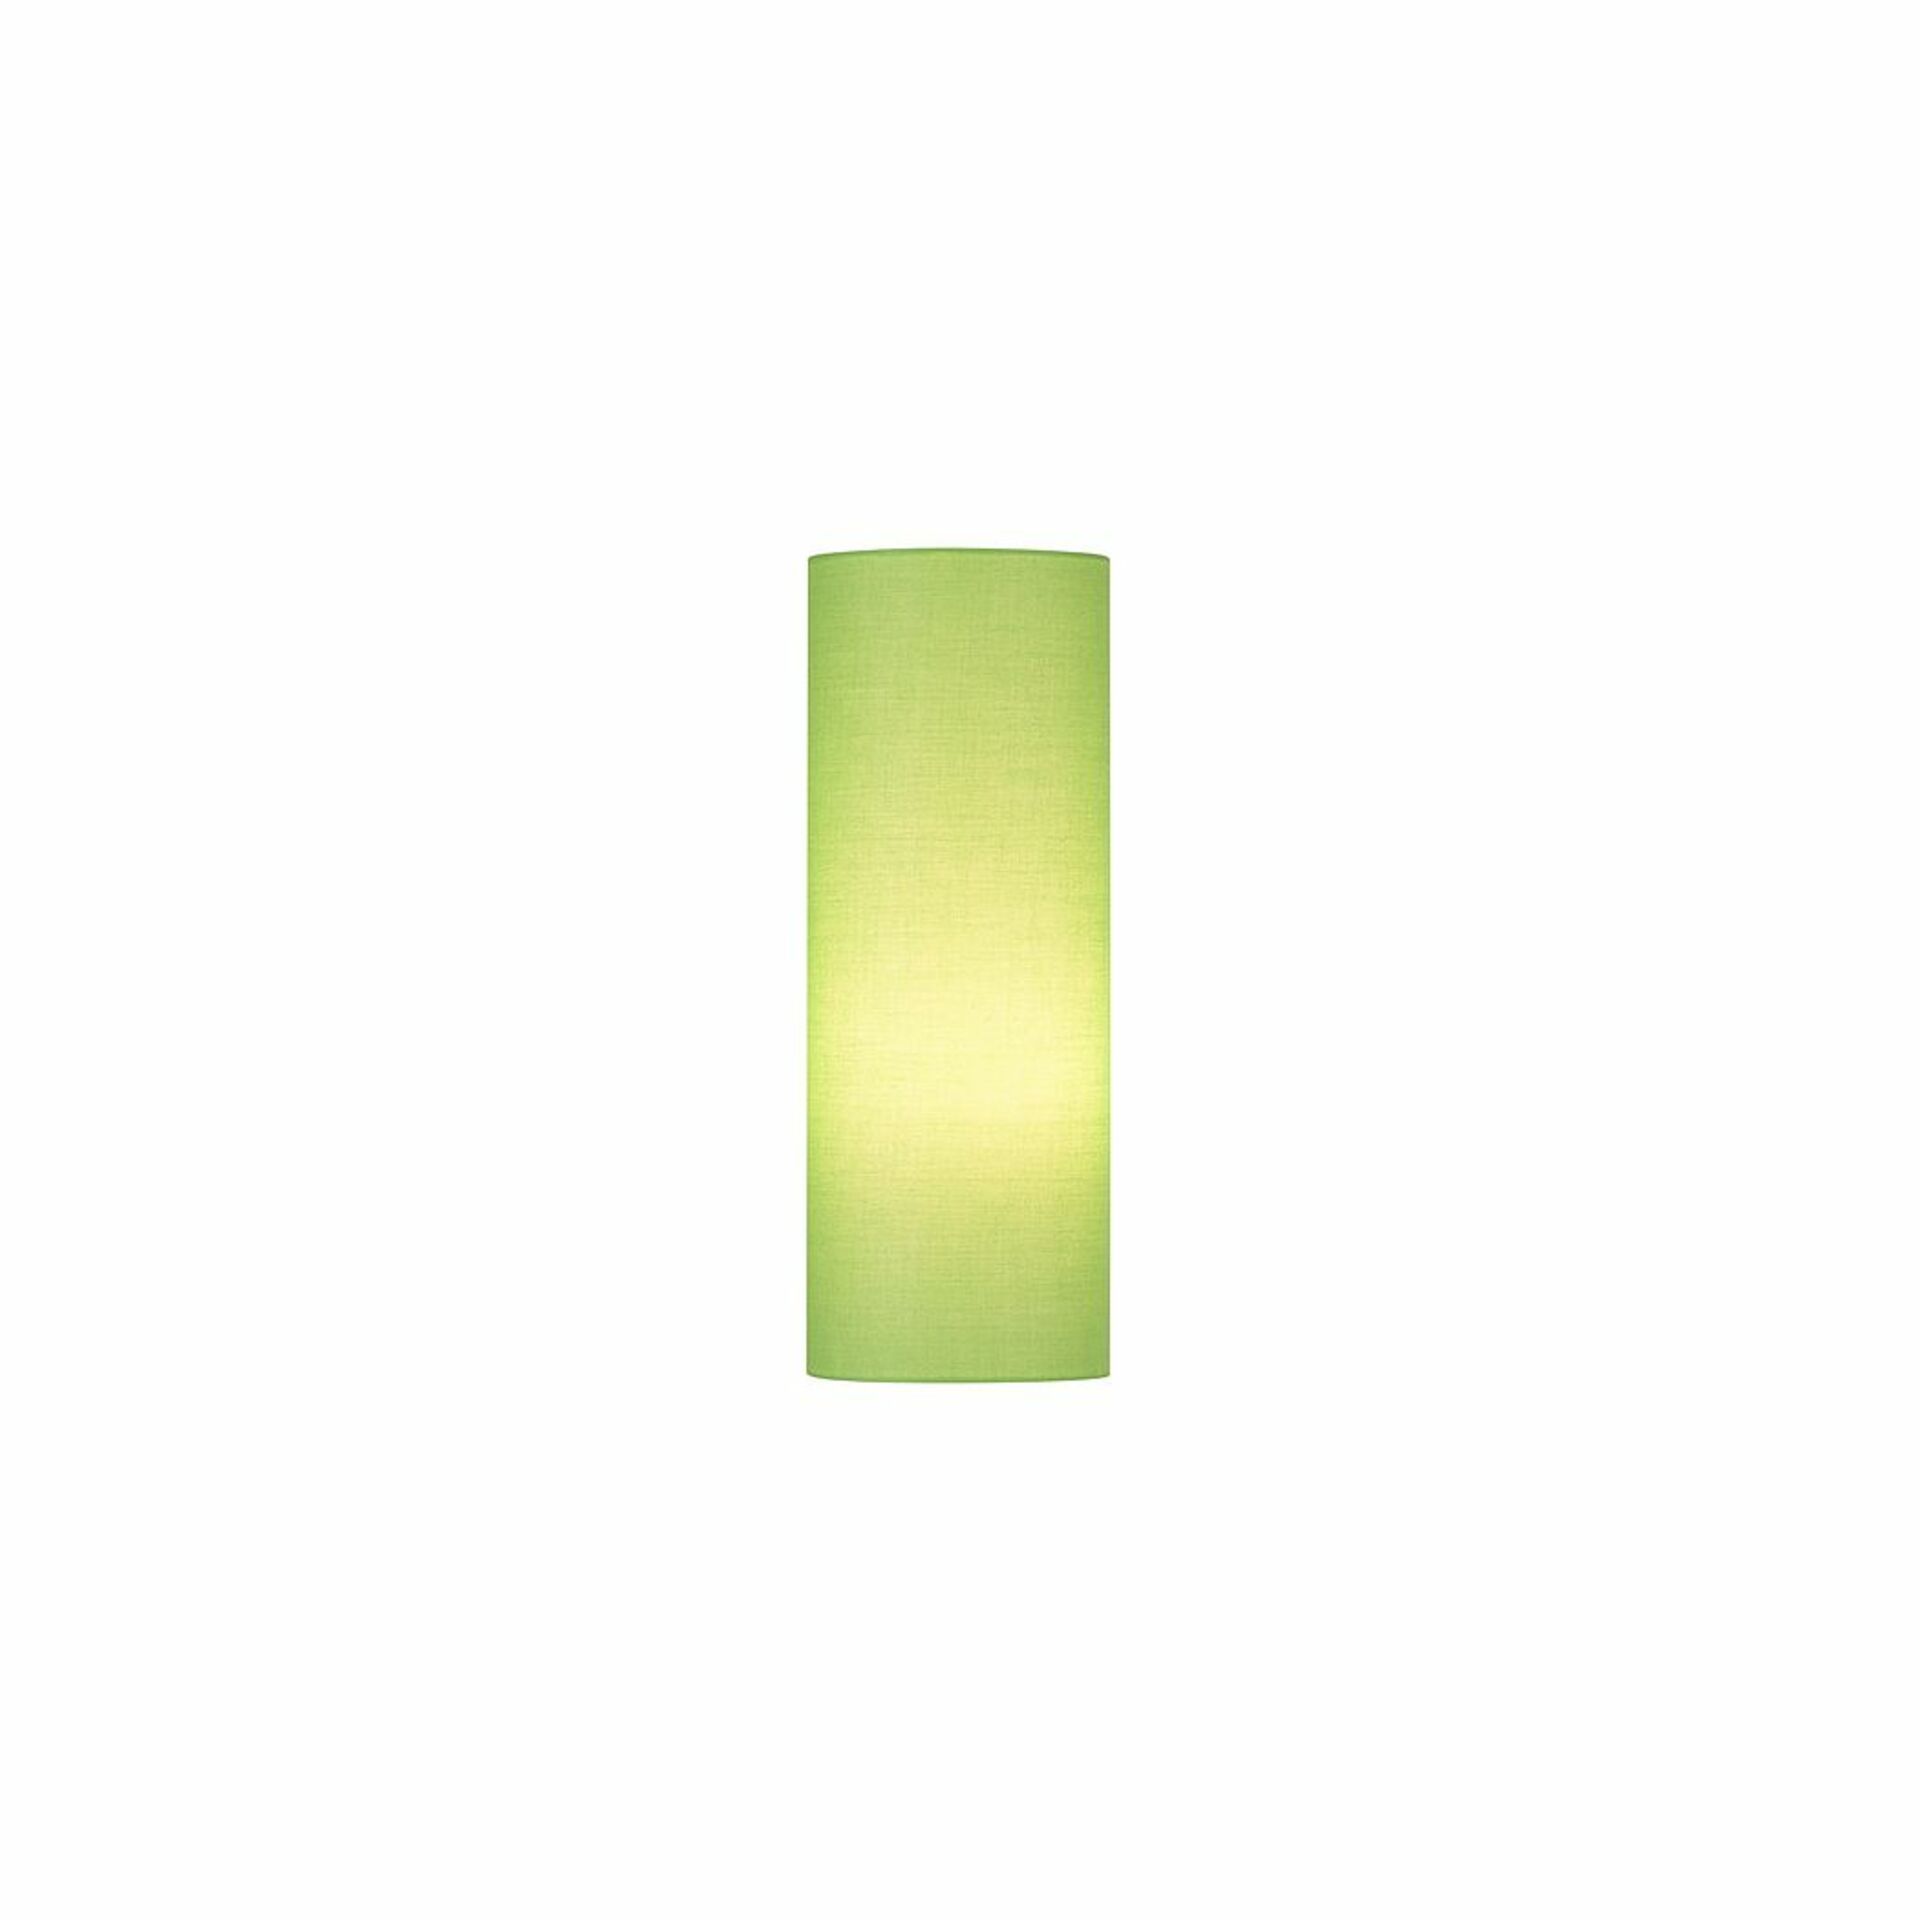 SLV BIG WHITE FENDA, stínítko svítidla, kulaté, zelené, pr./V 15/40 cm 156145